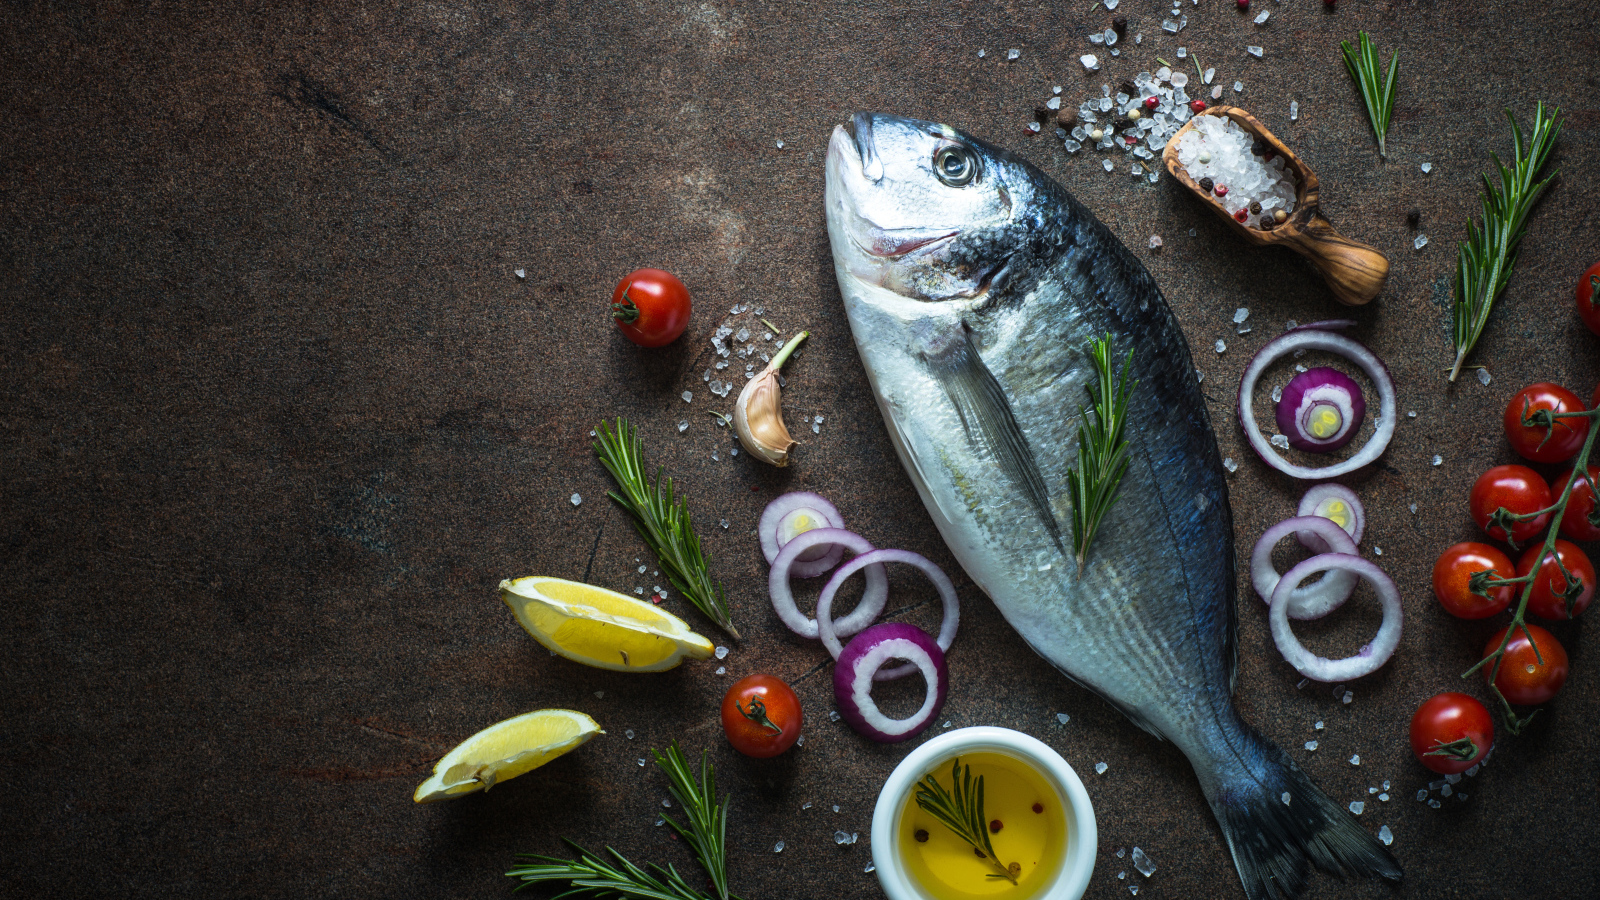 Свежая рыба на столе с овощами и специями 